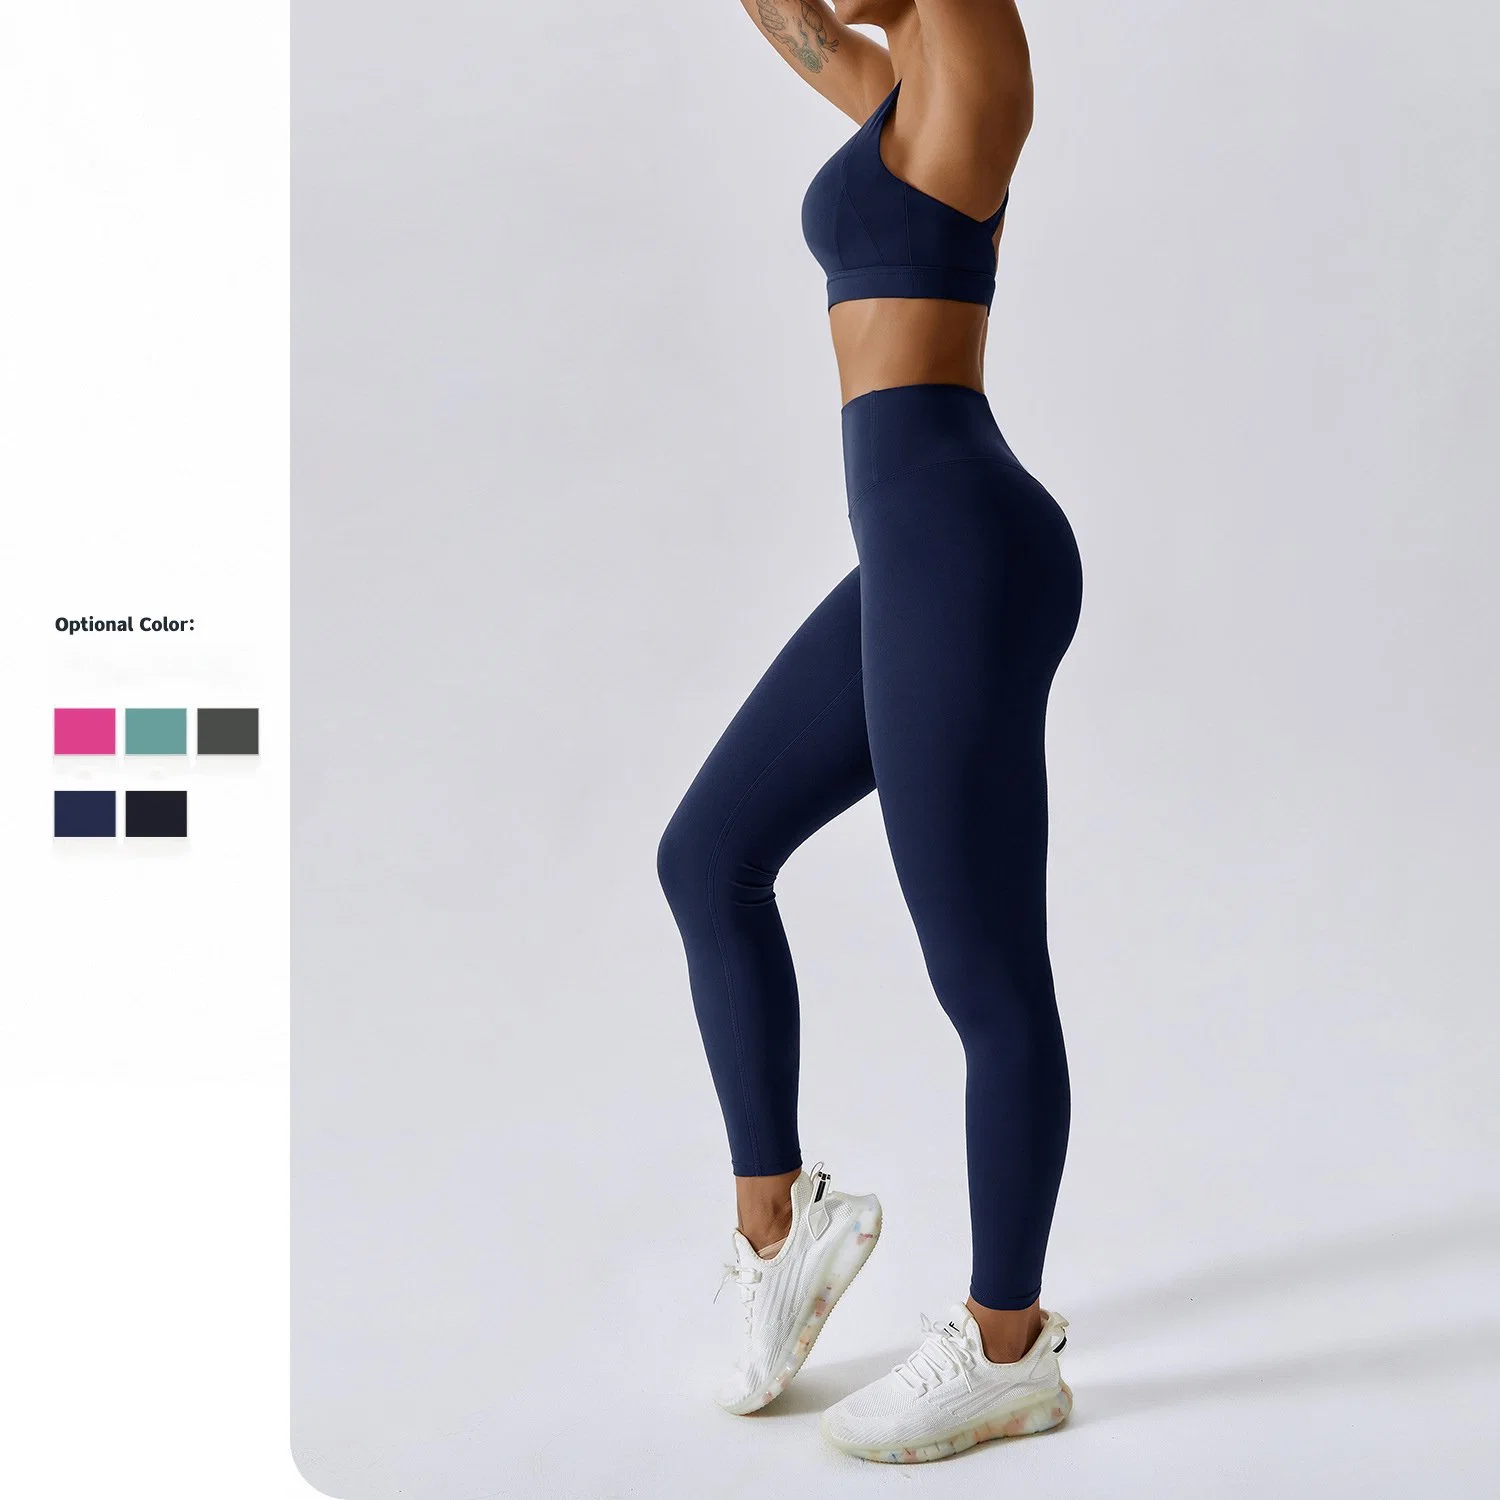 Yoga Set 2 Piece Workout Clothes for Women Cross Back Crop Top Sports Bra Fitness Top Gym Leggings Yoga Sportswear